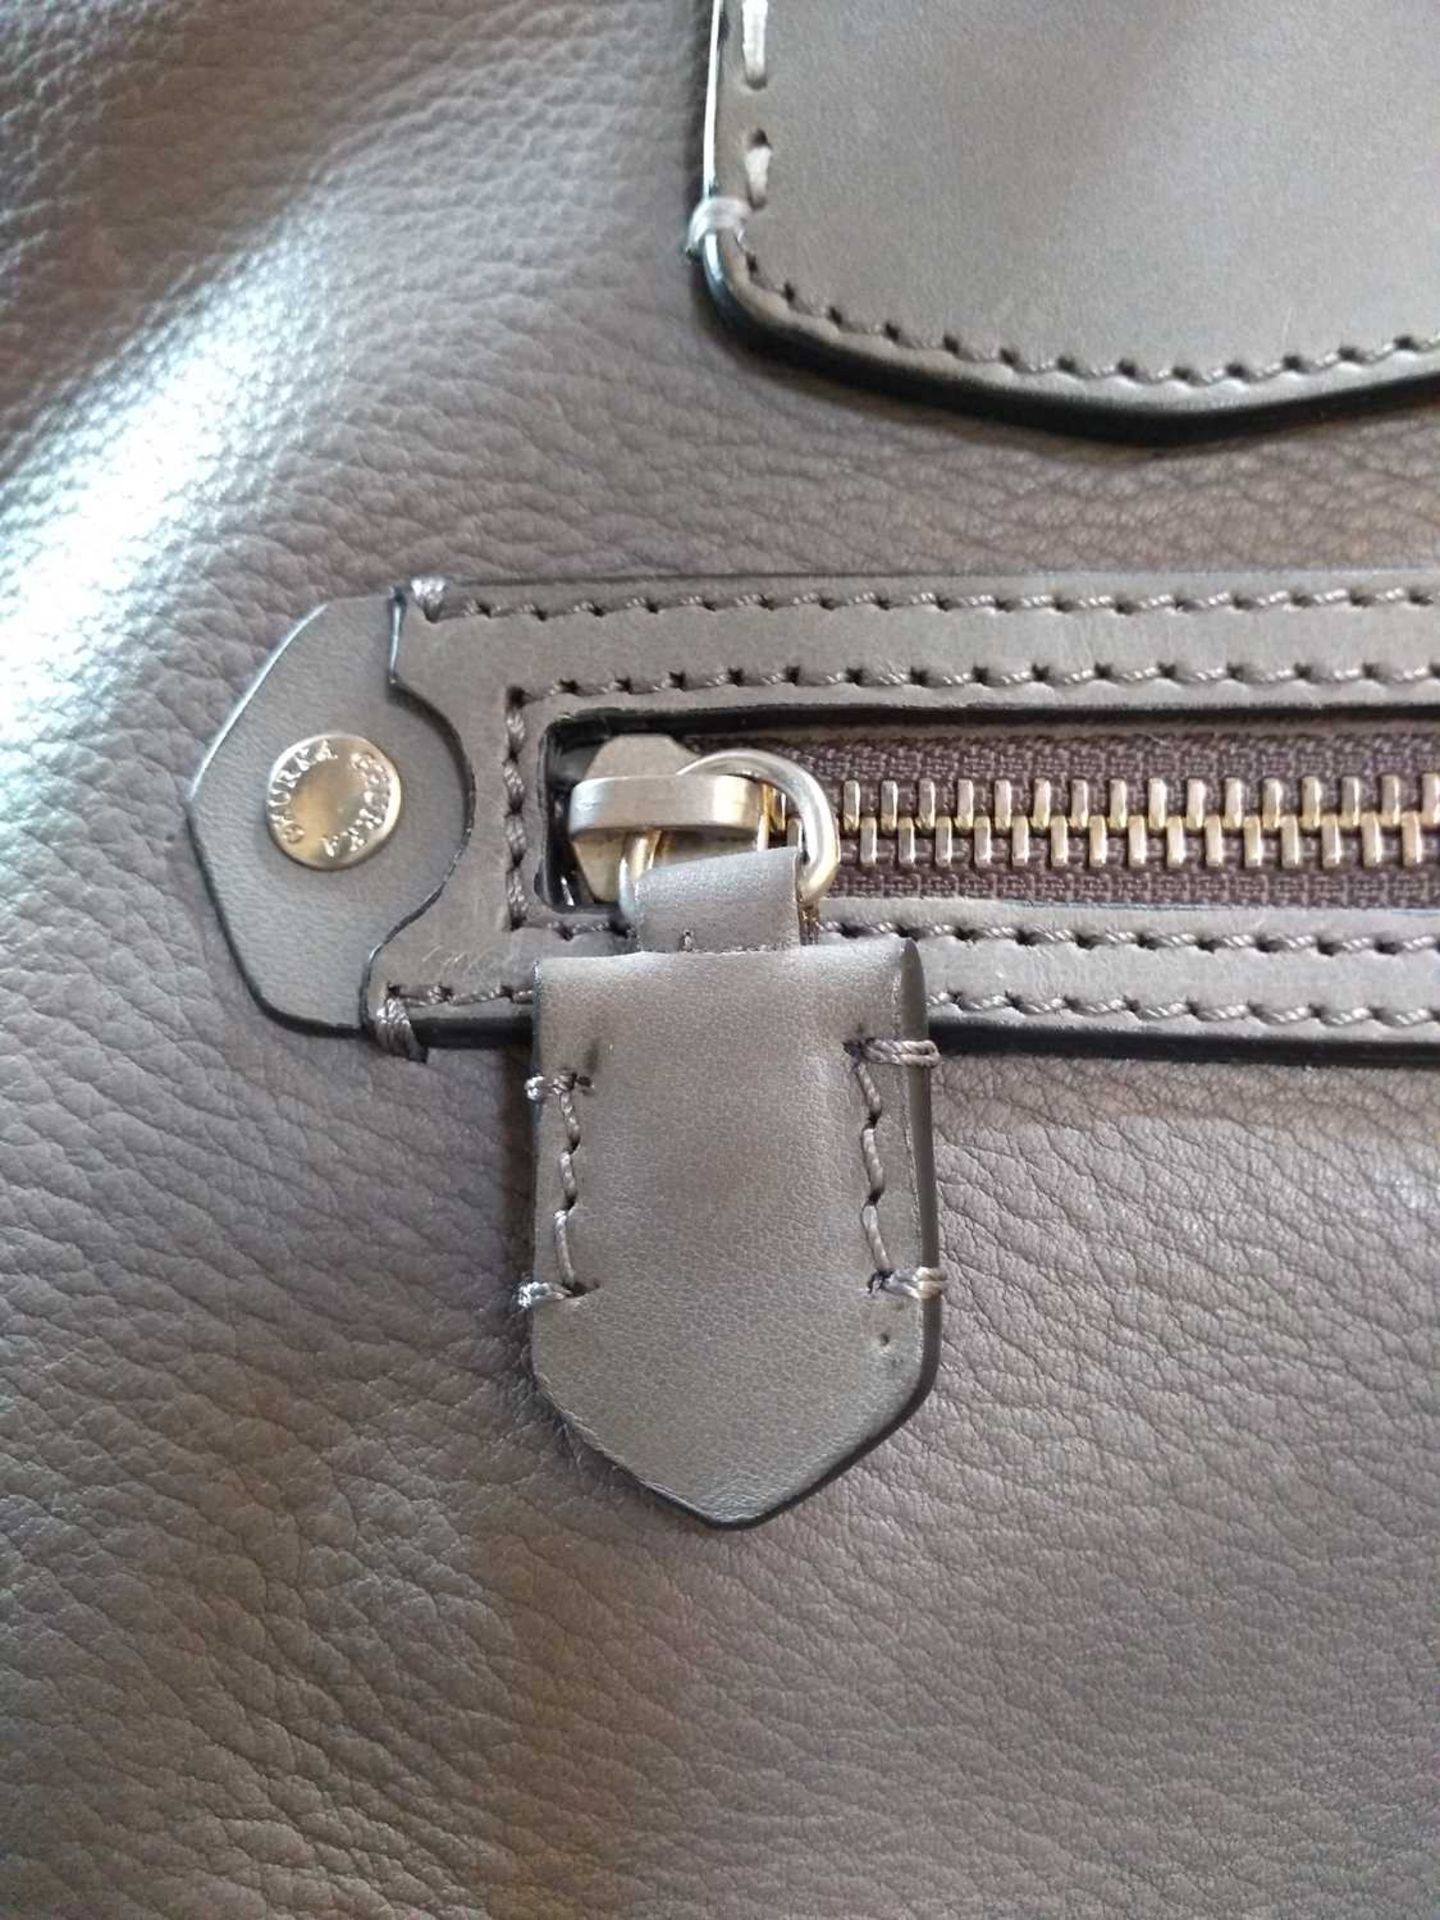 A Ghurka grey leather travel bag, - Image 10 of 13